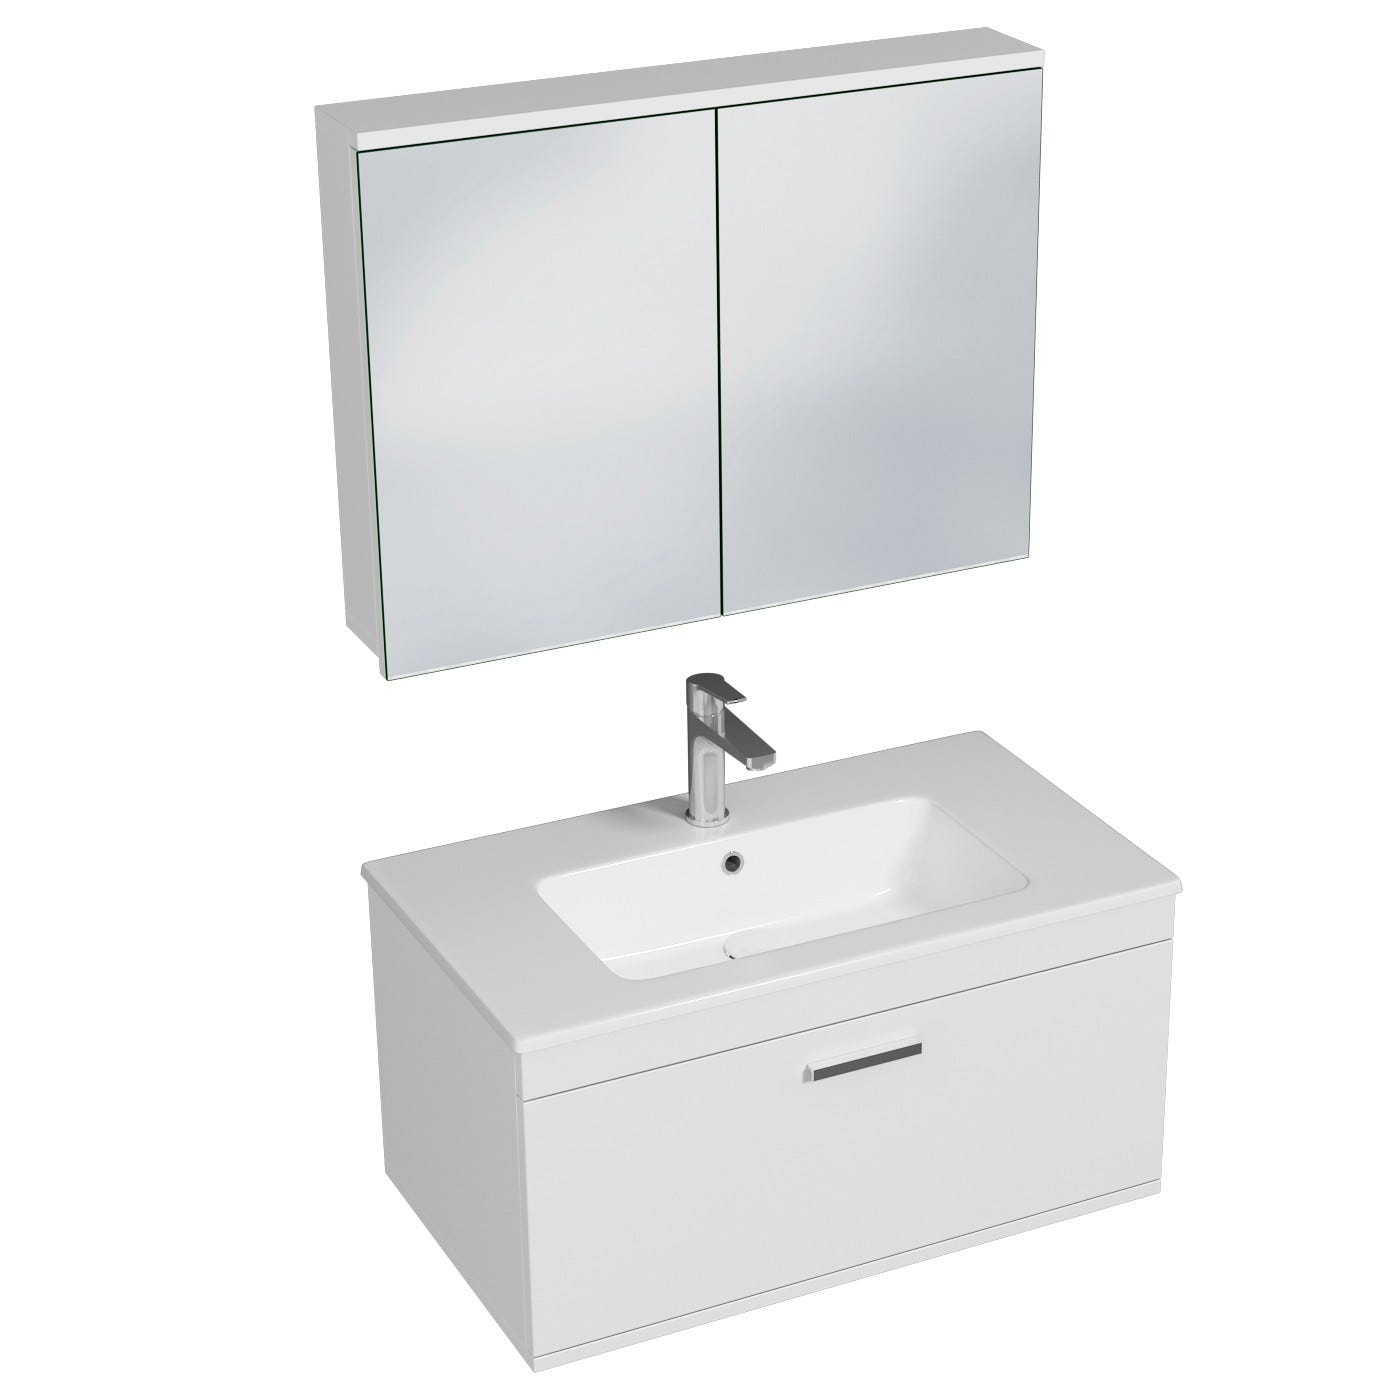 RUBITE Meuble salle de bain simple vasque 1 tiroir blanc largeur 80 cm + miroir armoire 0